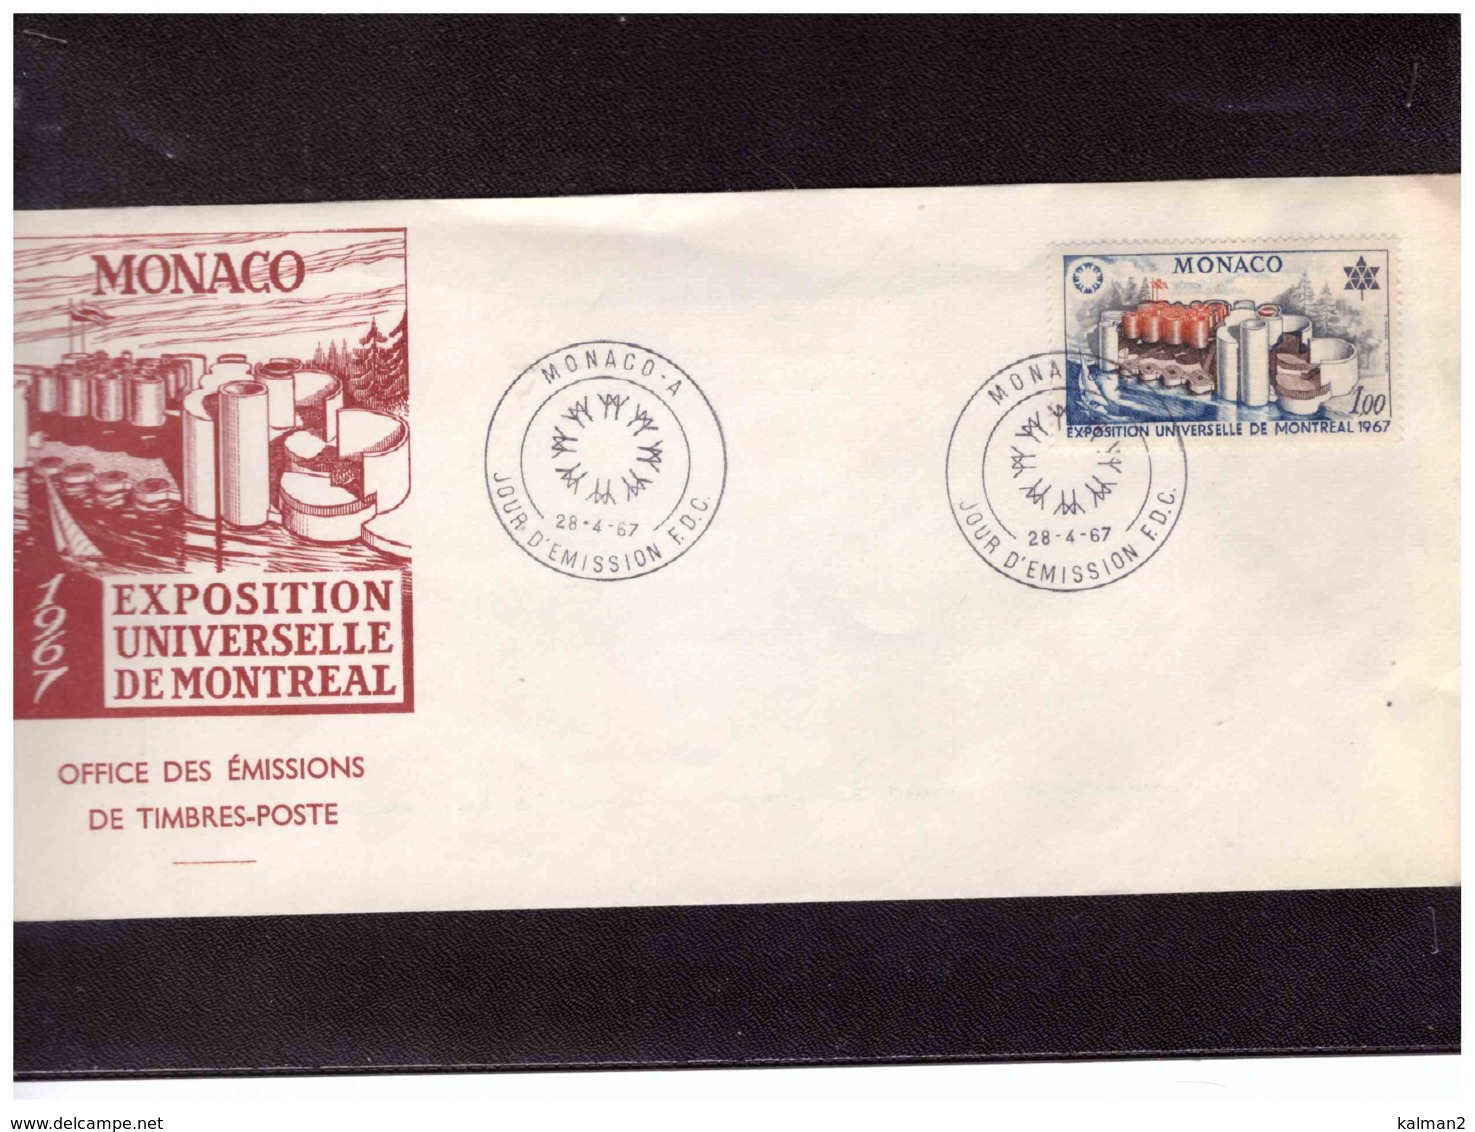 940  -   MONACO  28.4.67  /   FDC  EXPO UNIVERSELLE DE MONTREAL,  MICHEL NR. 867 - 1967 – Montréal (Canada)